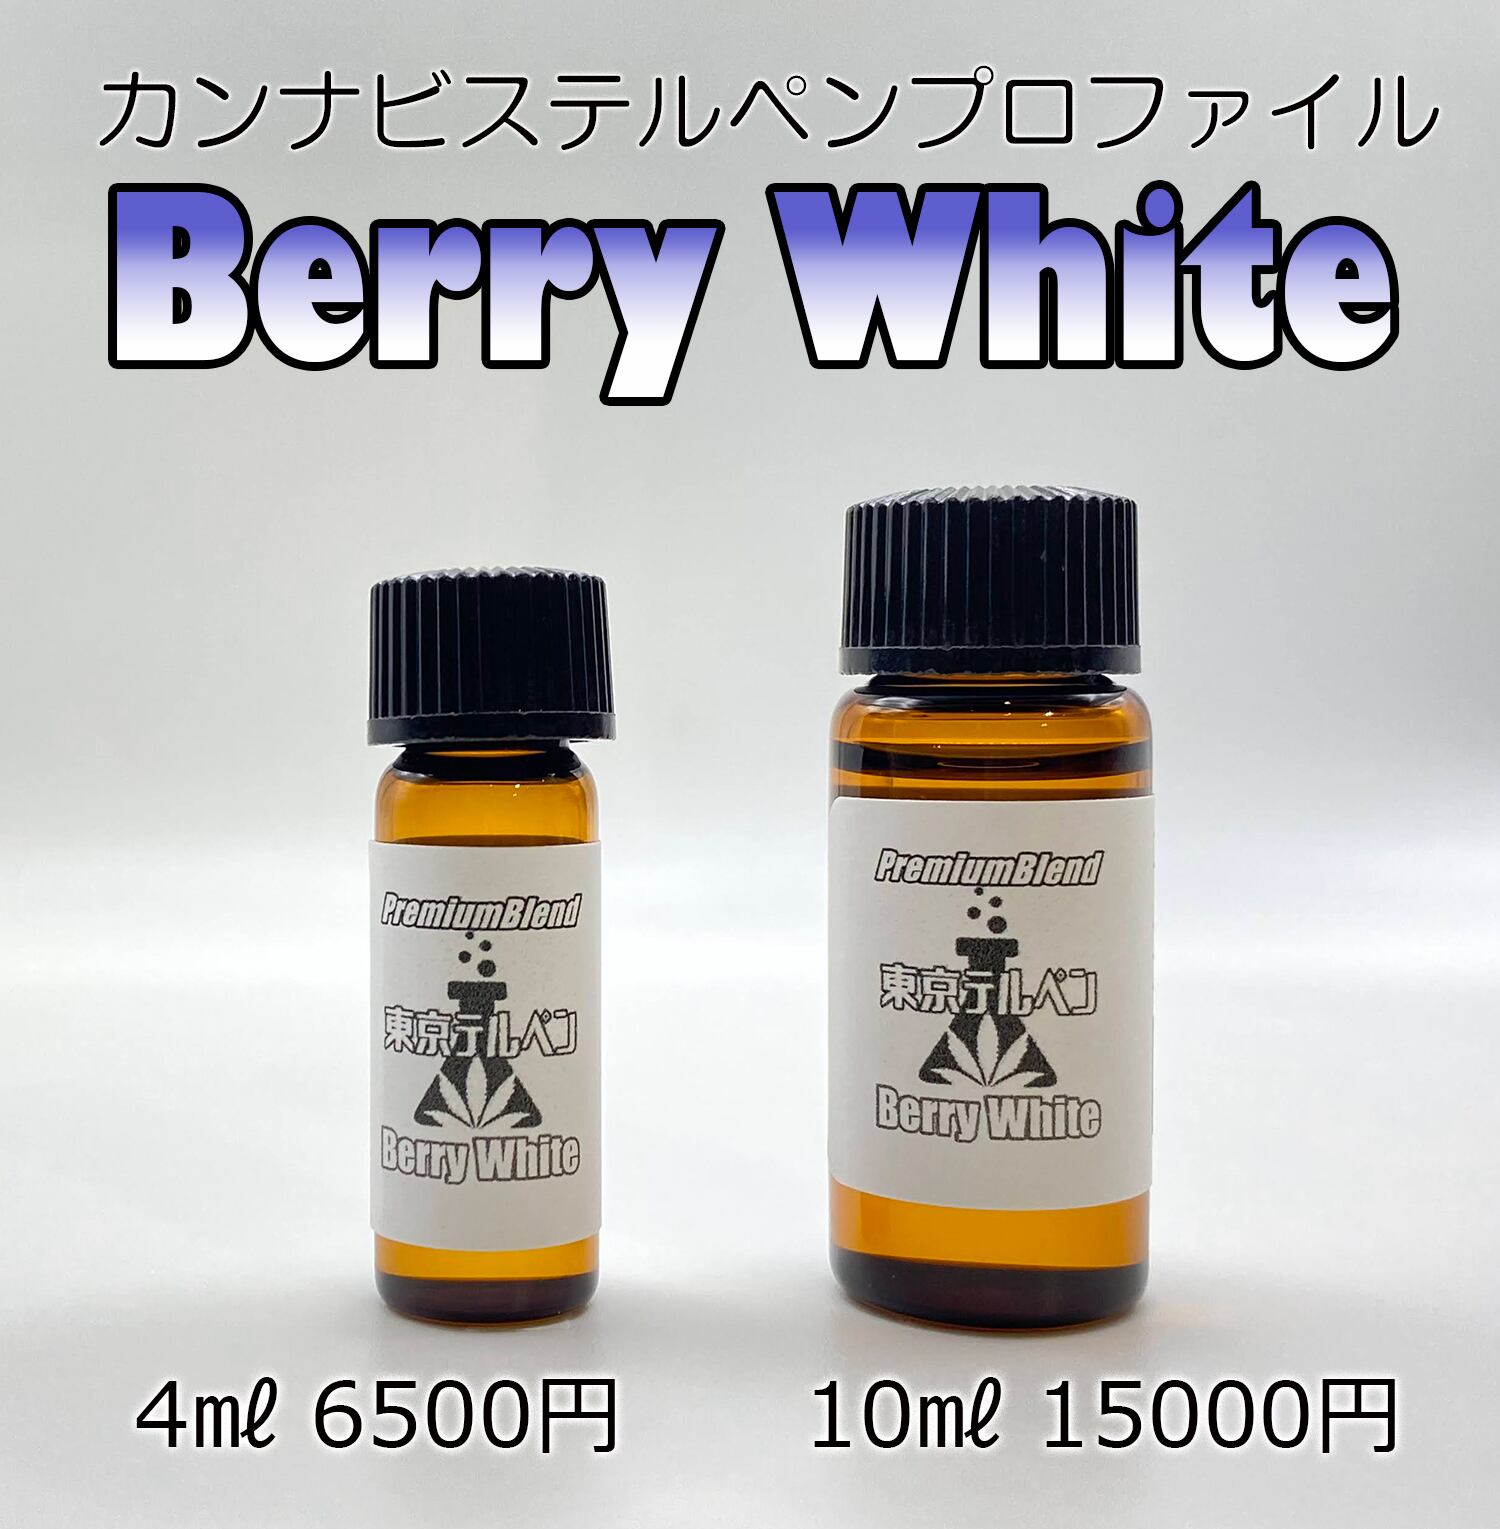 Berry White カンナビステルペンプロファイル プレミアムブレンド 4ml